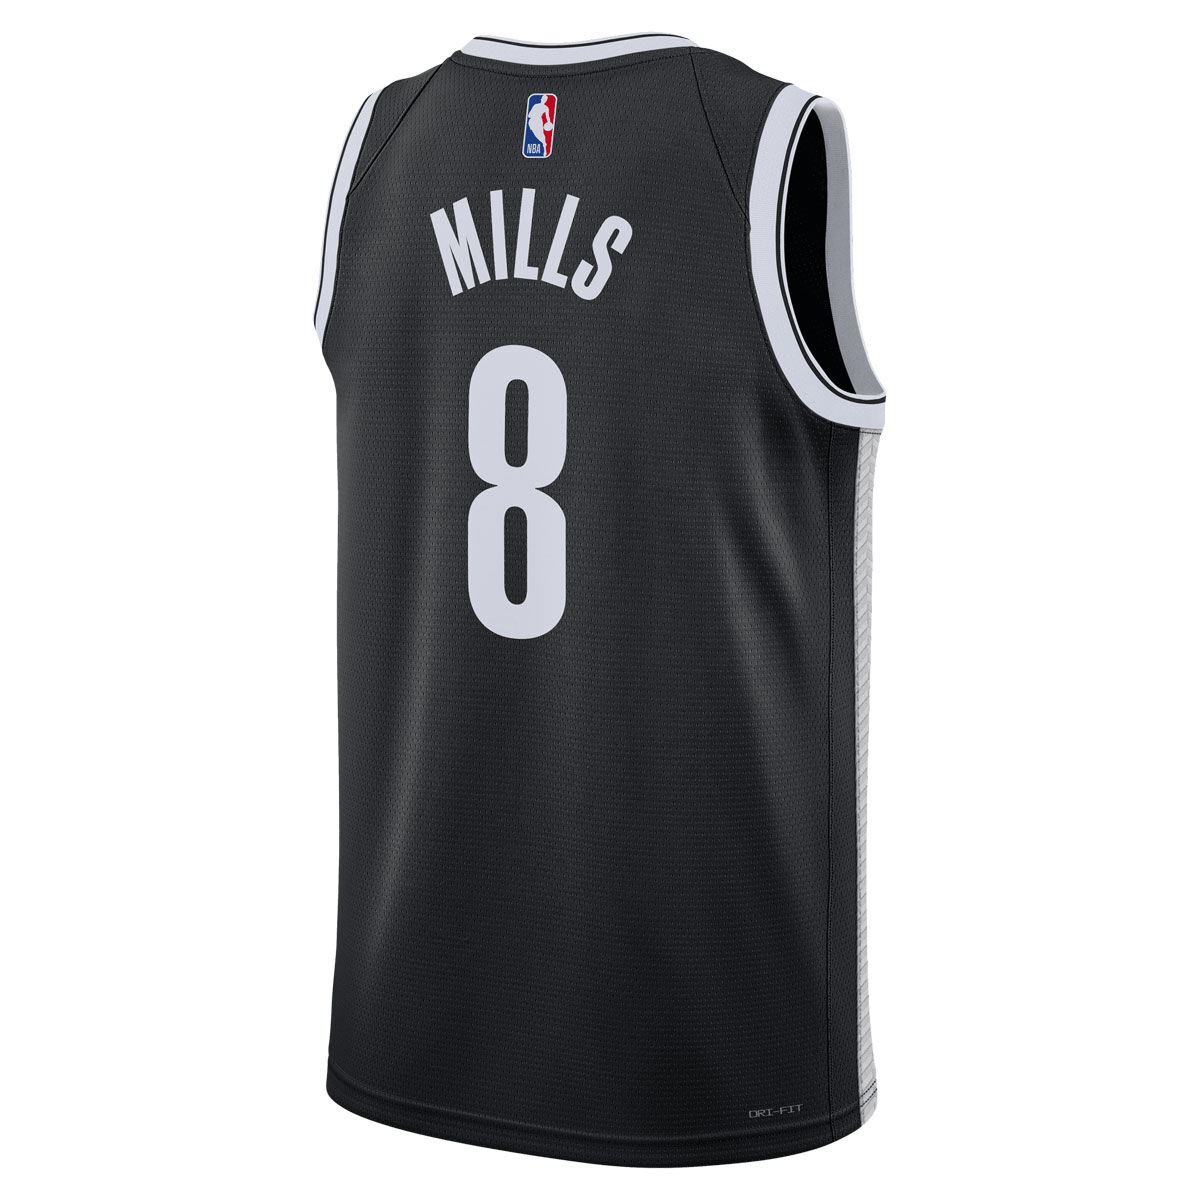 Patty Mills to put on a Brooklyn Nets jersey